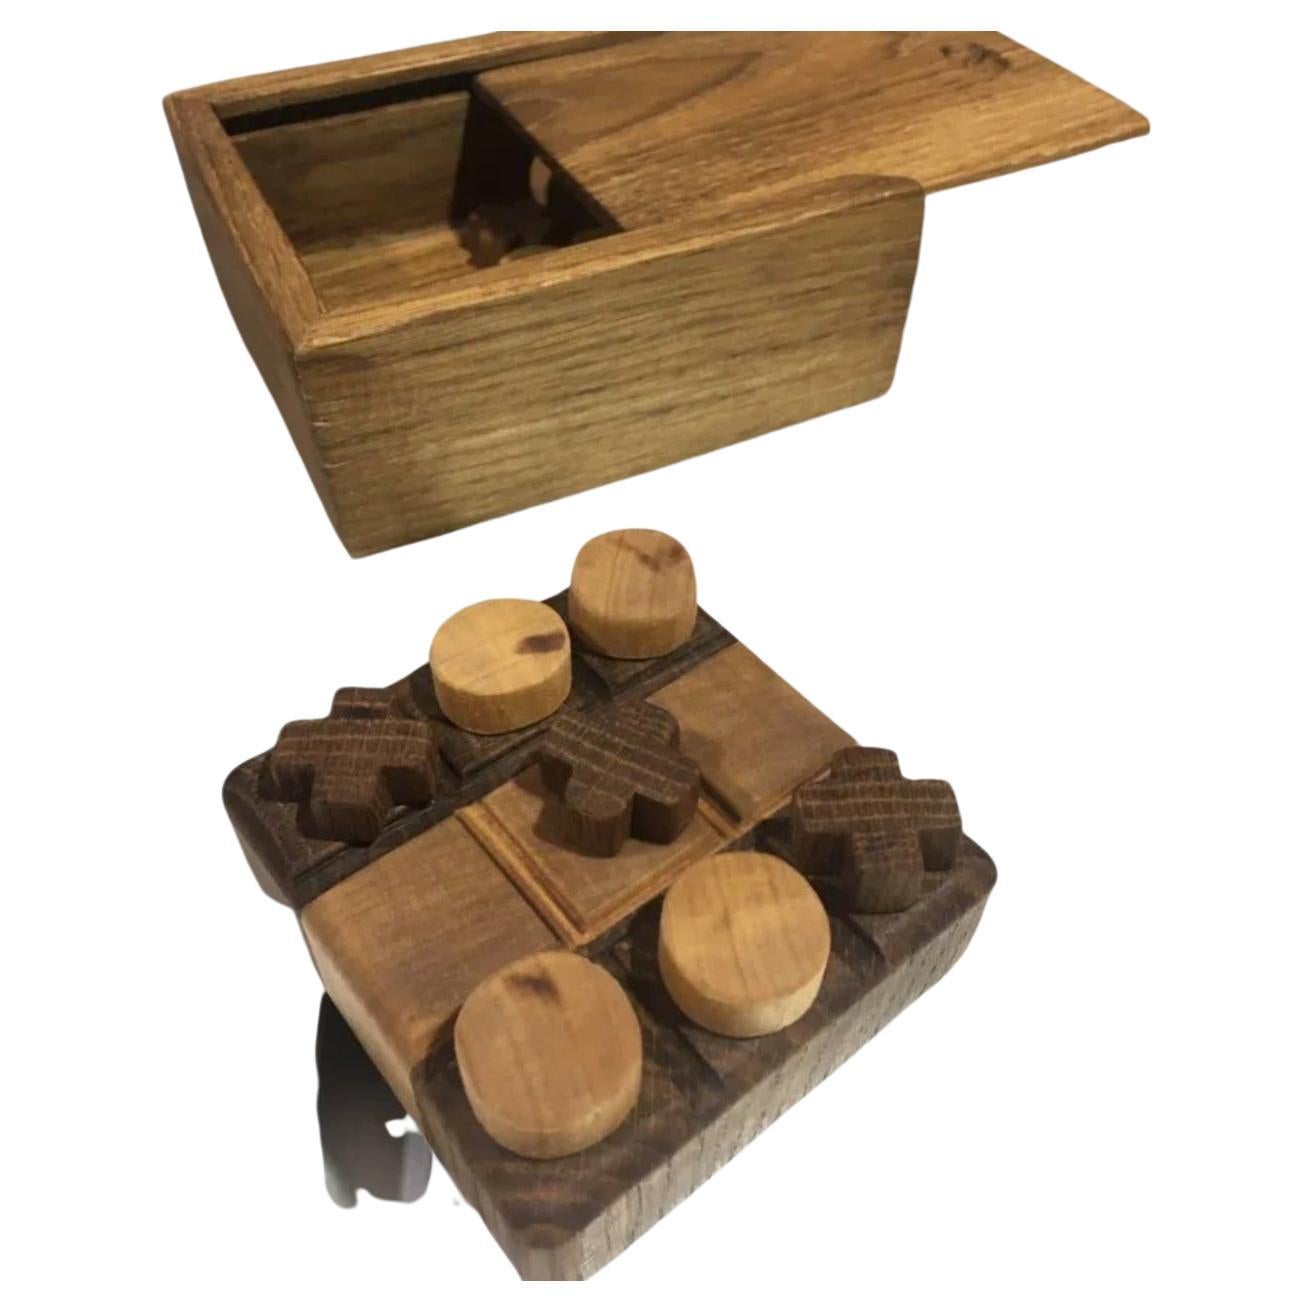 Tic-tac-toe Game in a Box. Oak Material Handmade